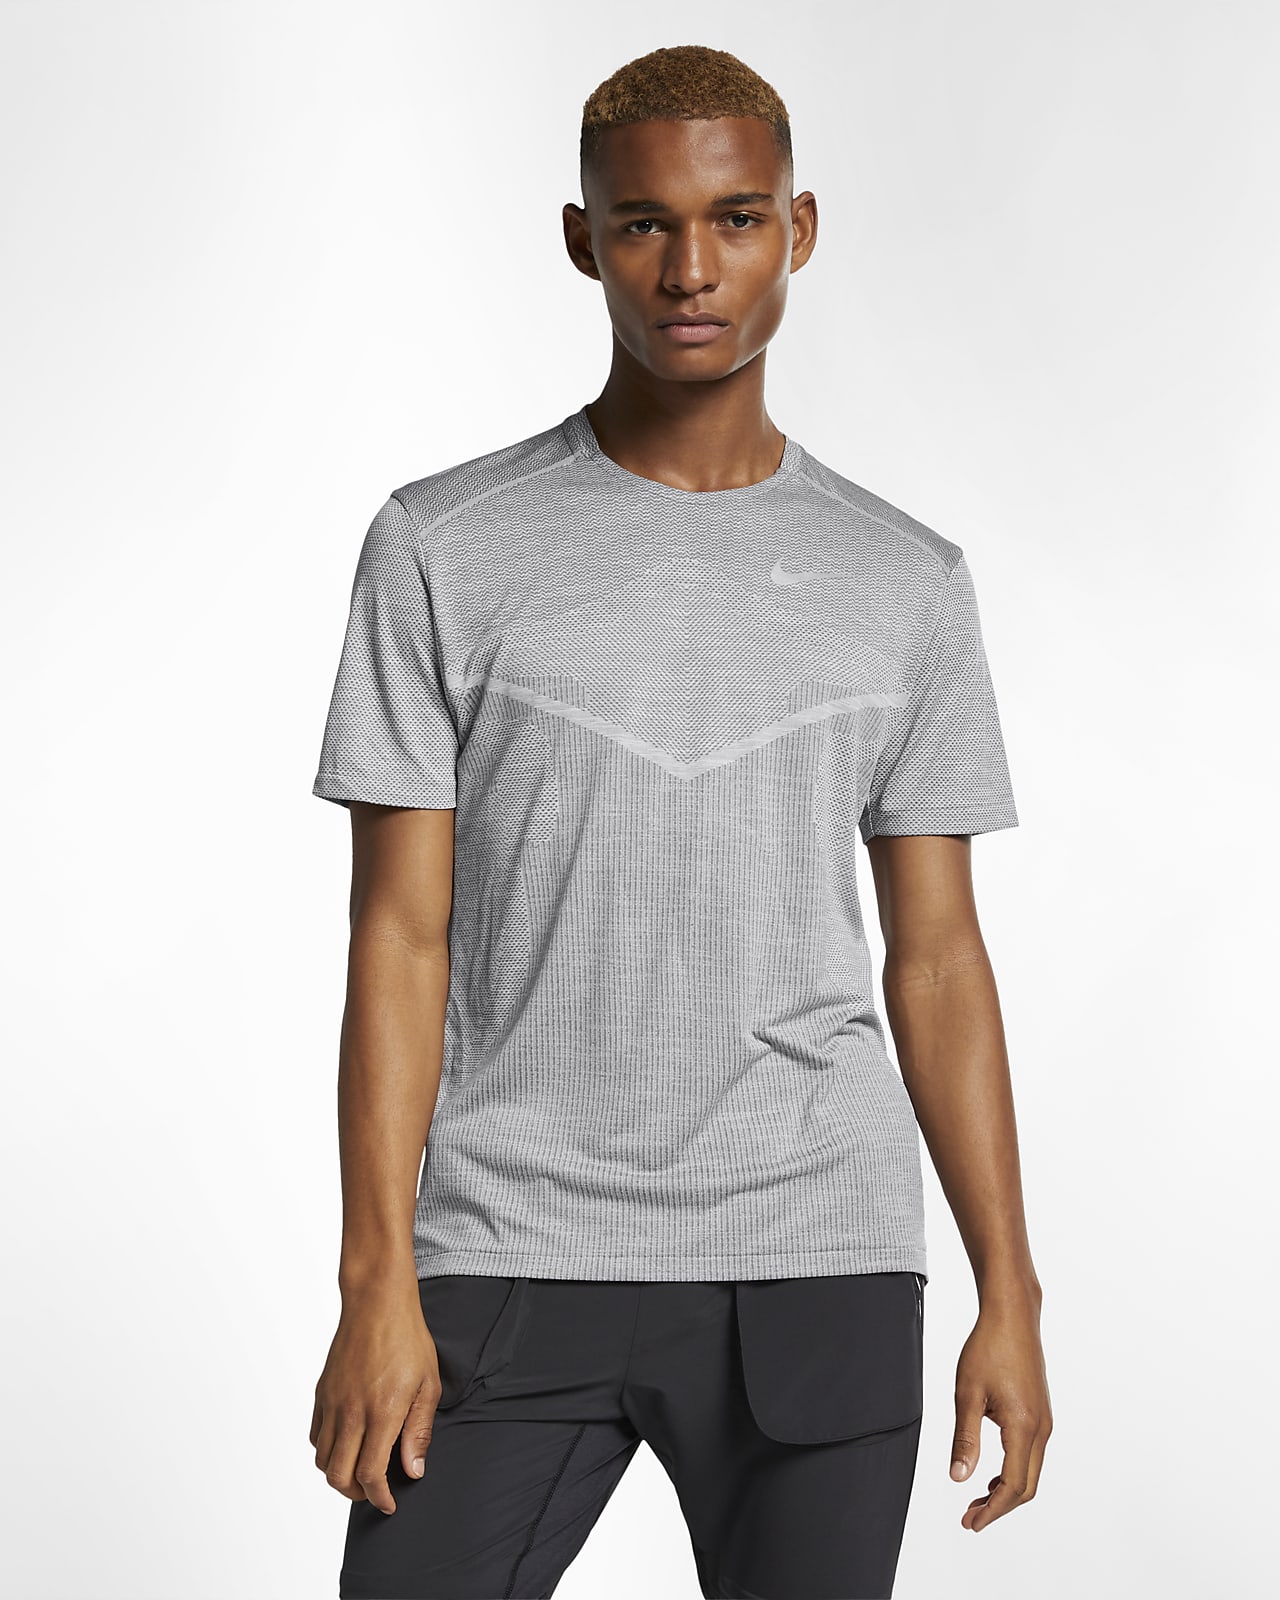 Nike TechKnit Ultra 男子短袖跑步上衣